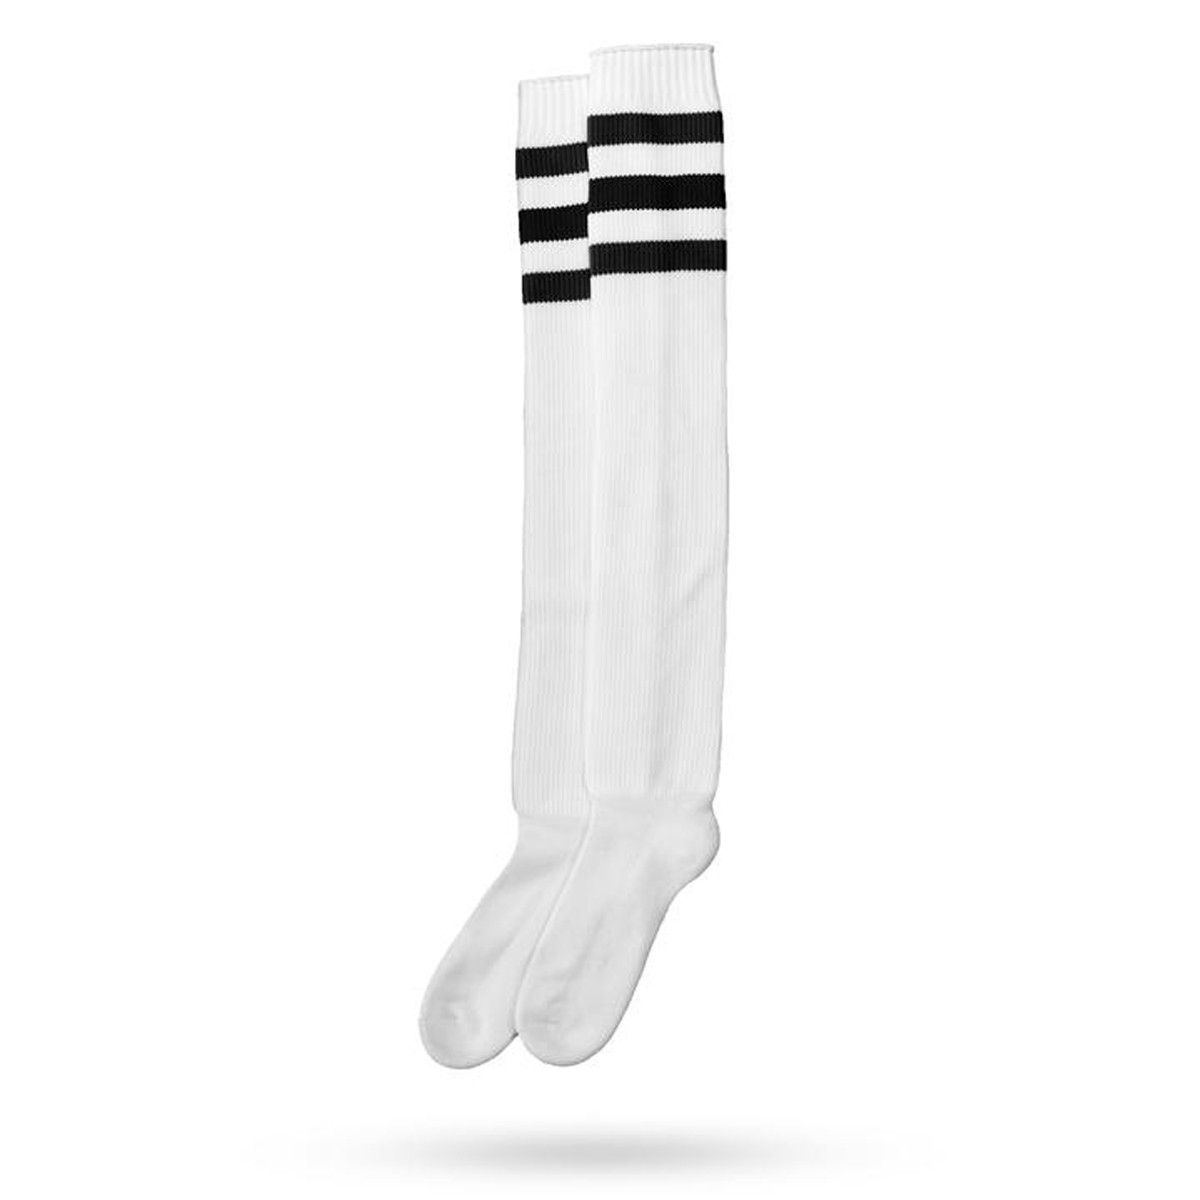 American Socks Old School Ultra High Çorap AS018